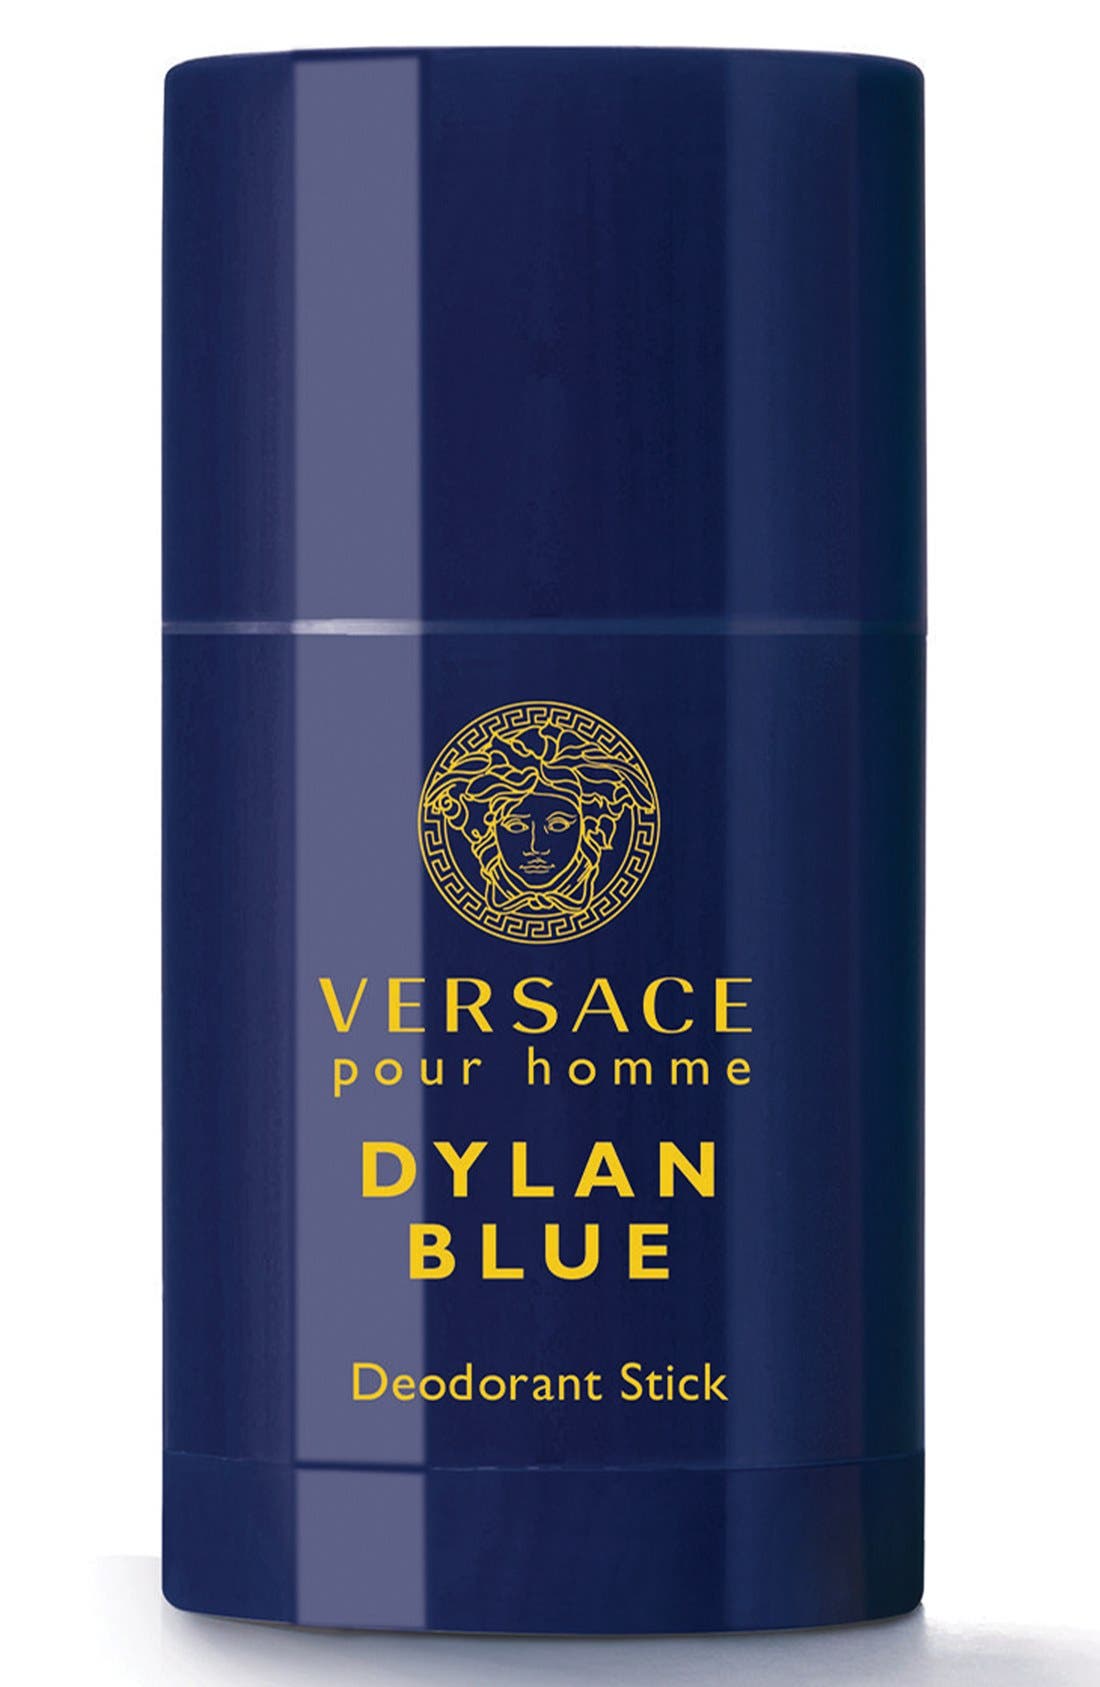 Versace Dylan Blue Deodorant Stick at Nordstrom